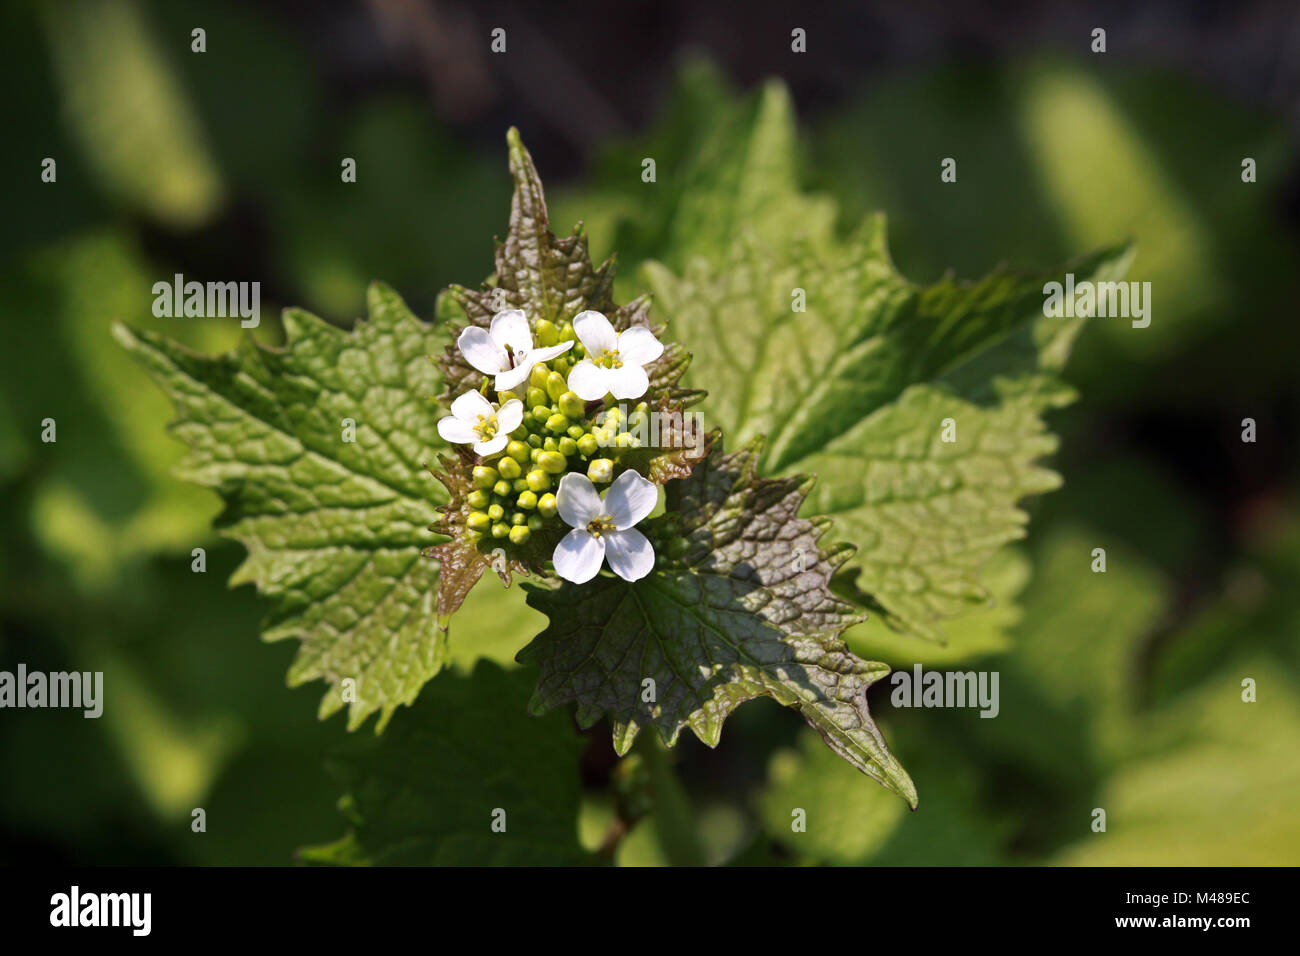 Gemeines Lauchkraut, Knoblauchsrauke (Alliaria petiolata, Alliaria officinalis) Stock Photo